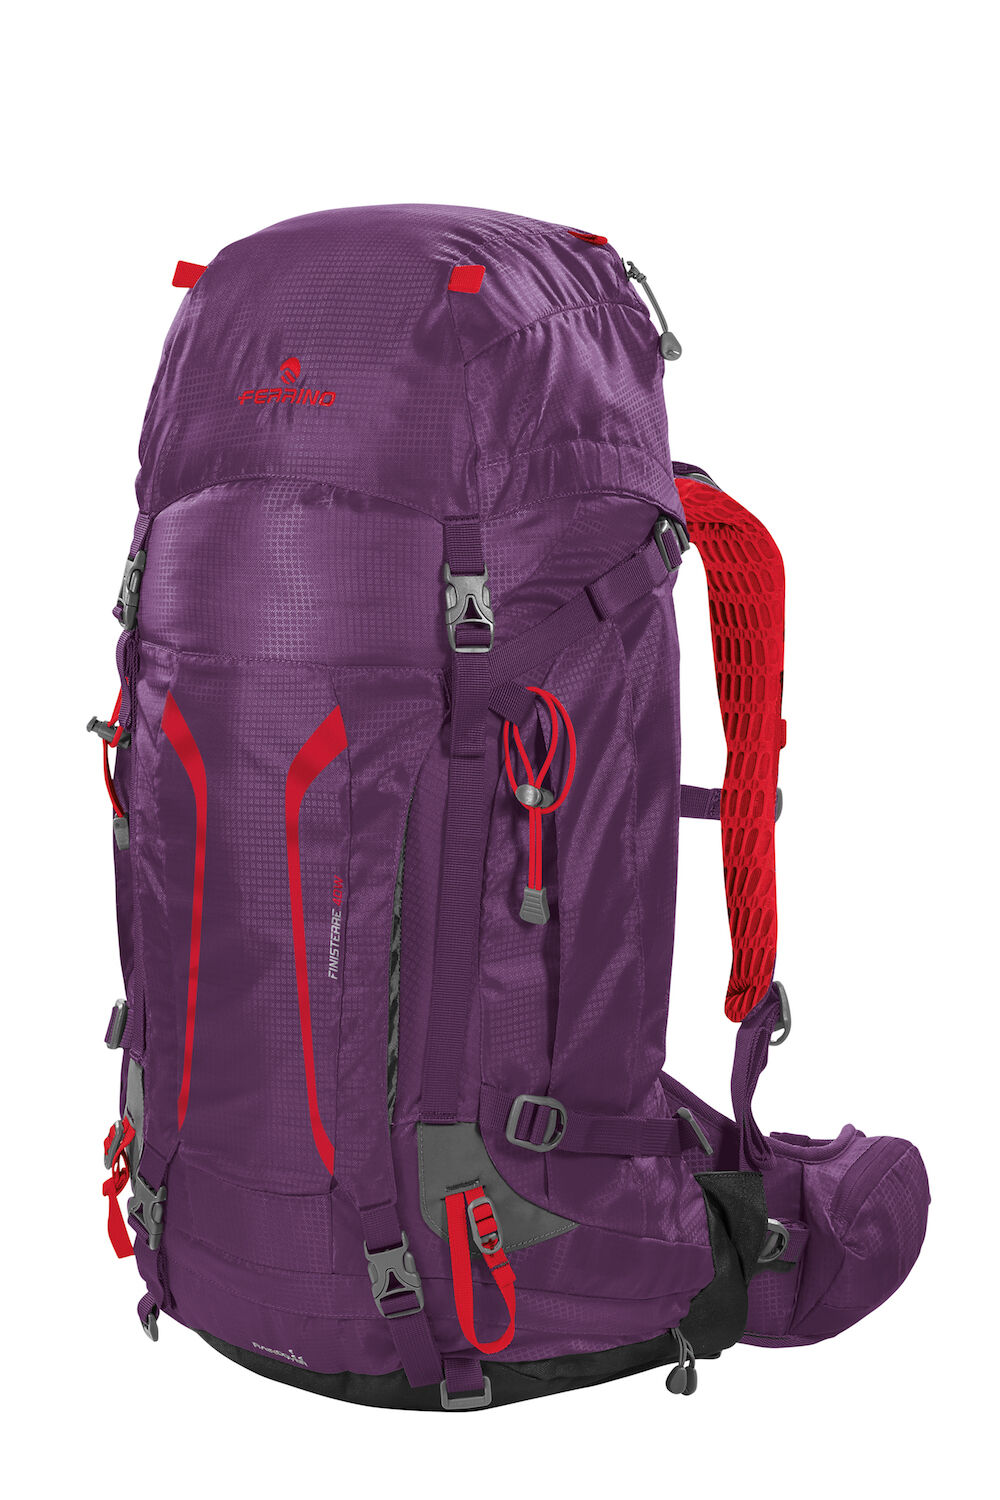 Ferrino Finisterre 40 Lady - Hiking backpack - Women's